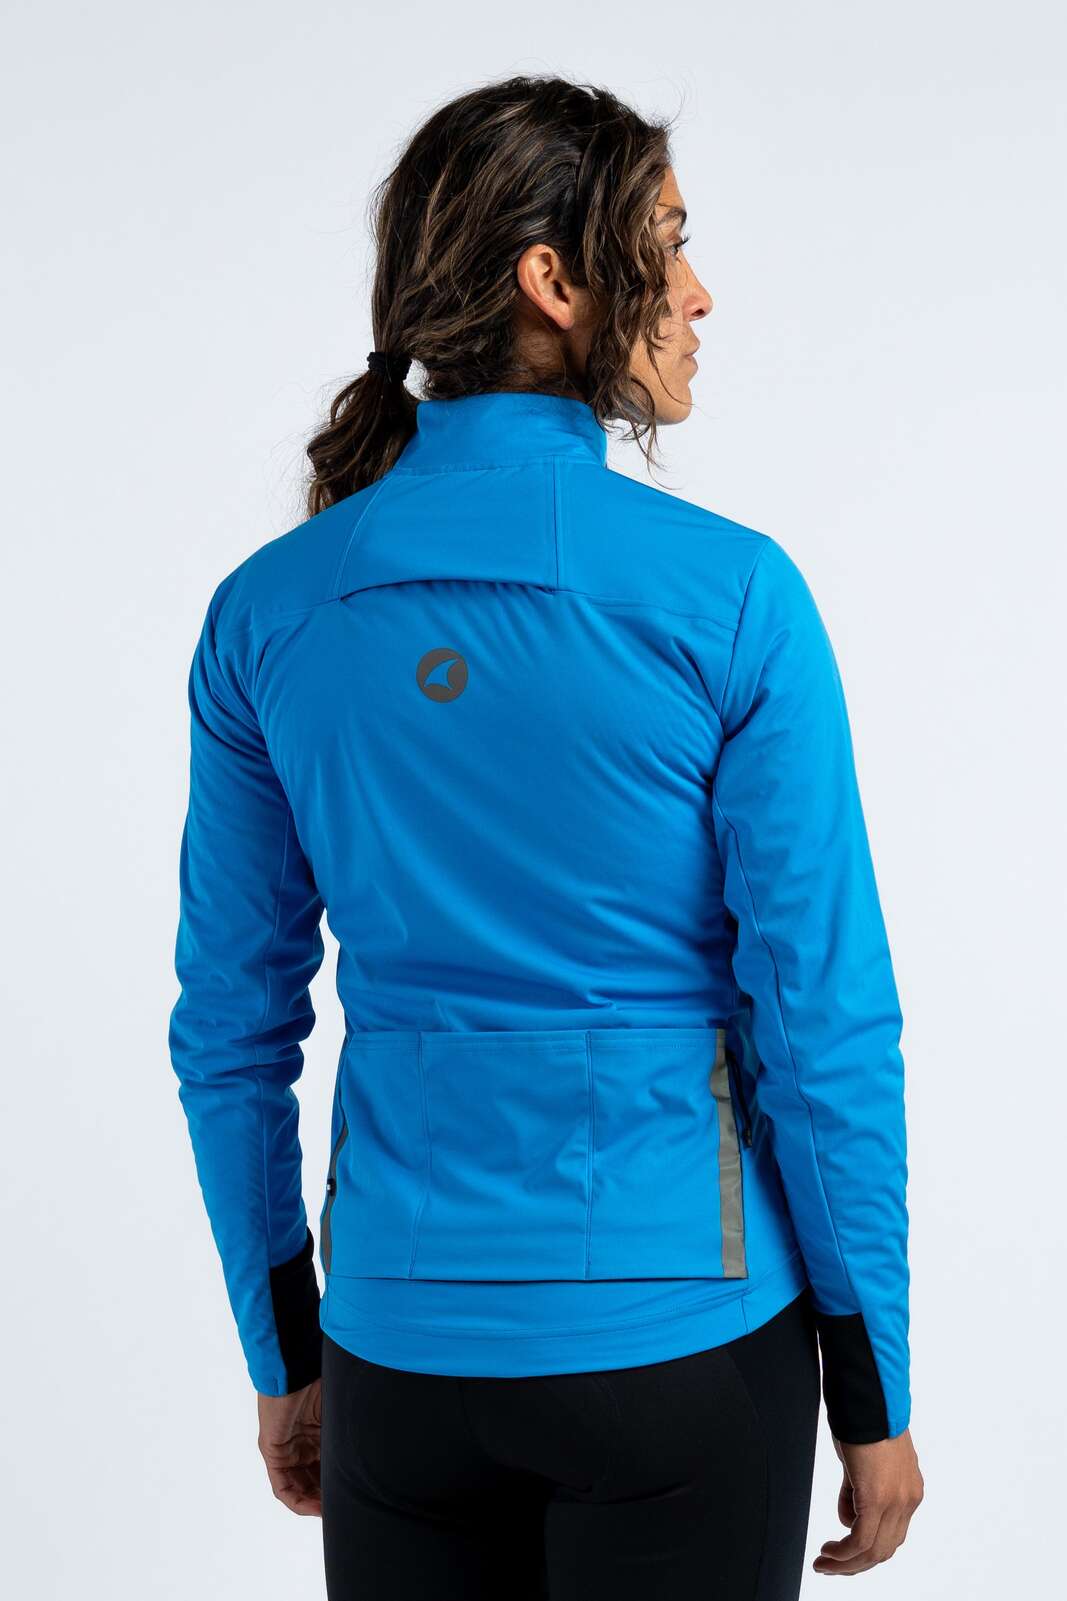 Women's Blue Winter Cycling Jacket - Back View 